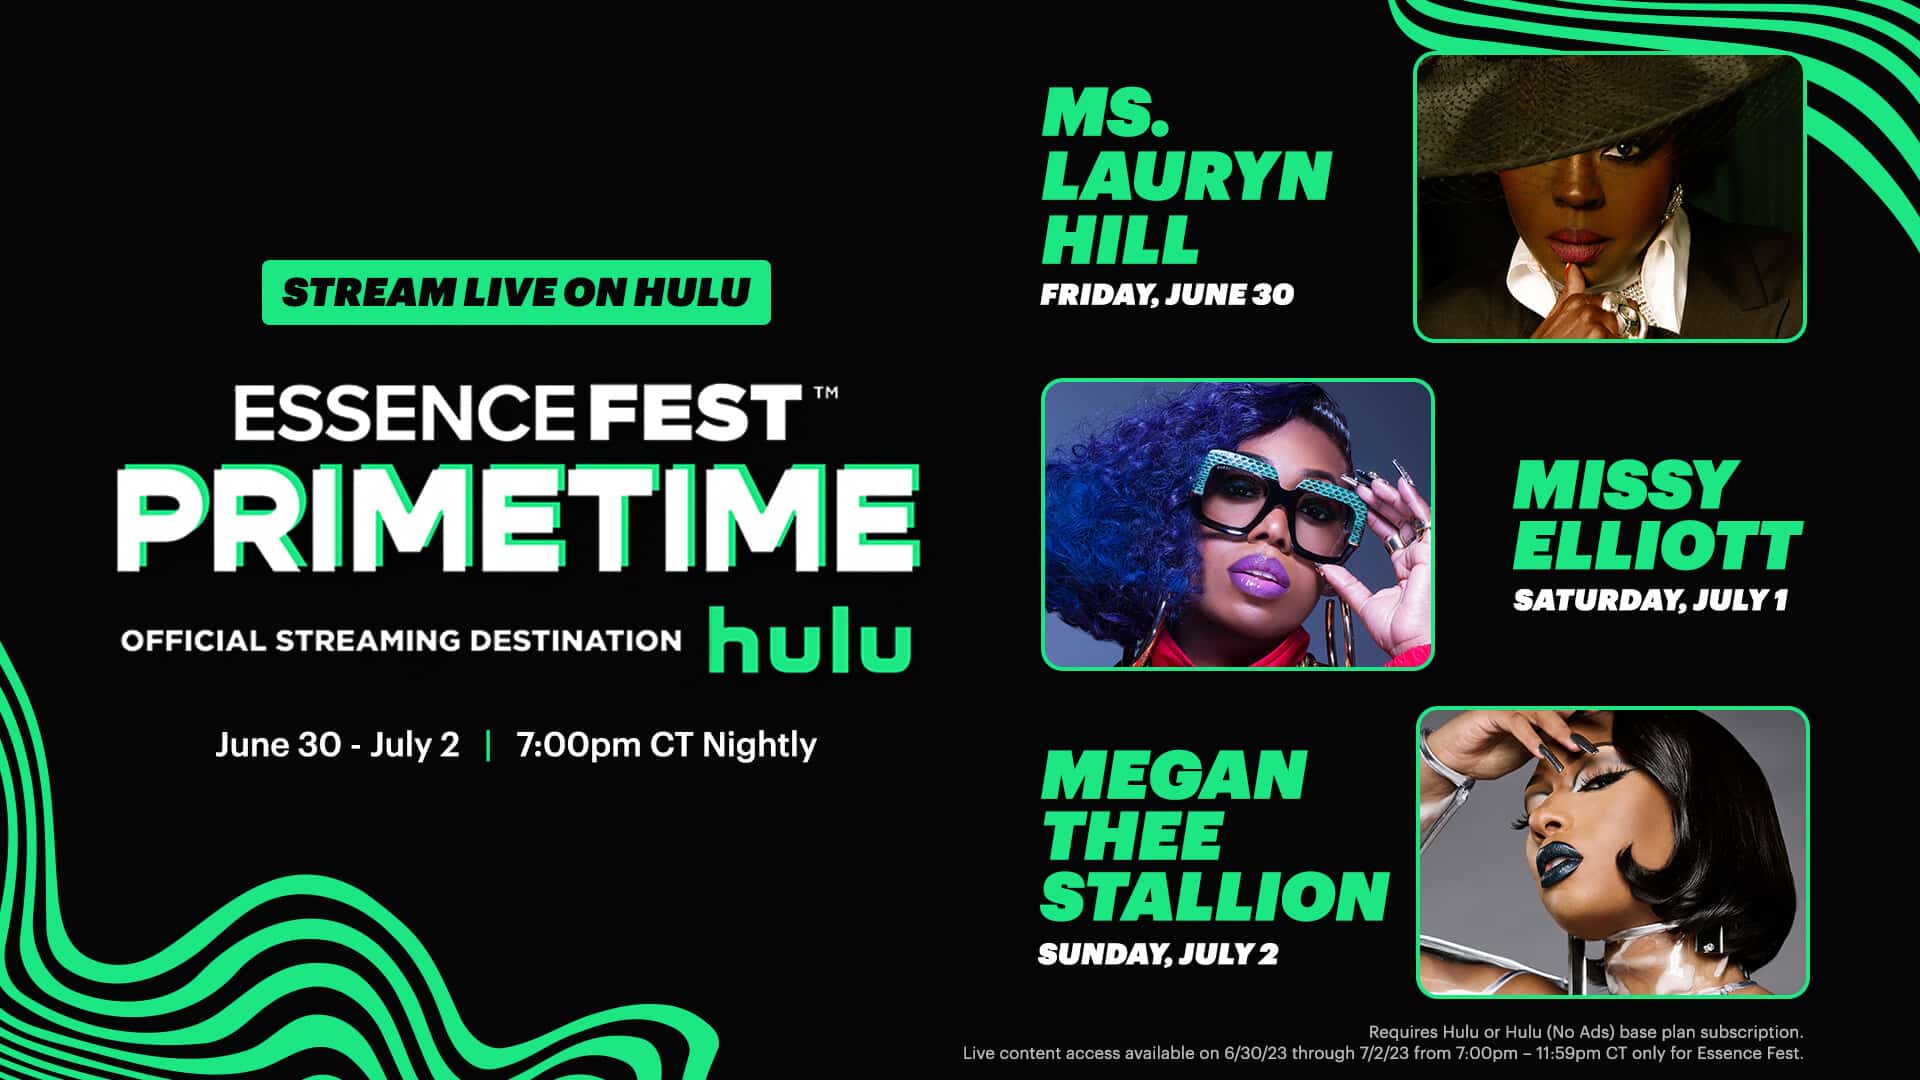 ESSENCE Fest Primetime Hulu Livestream Line-Up Announced